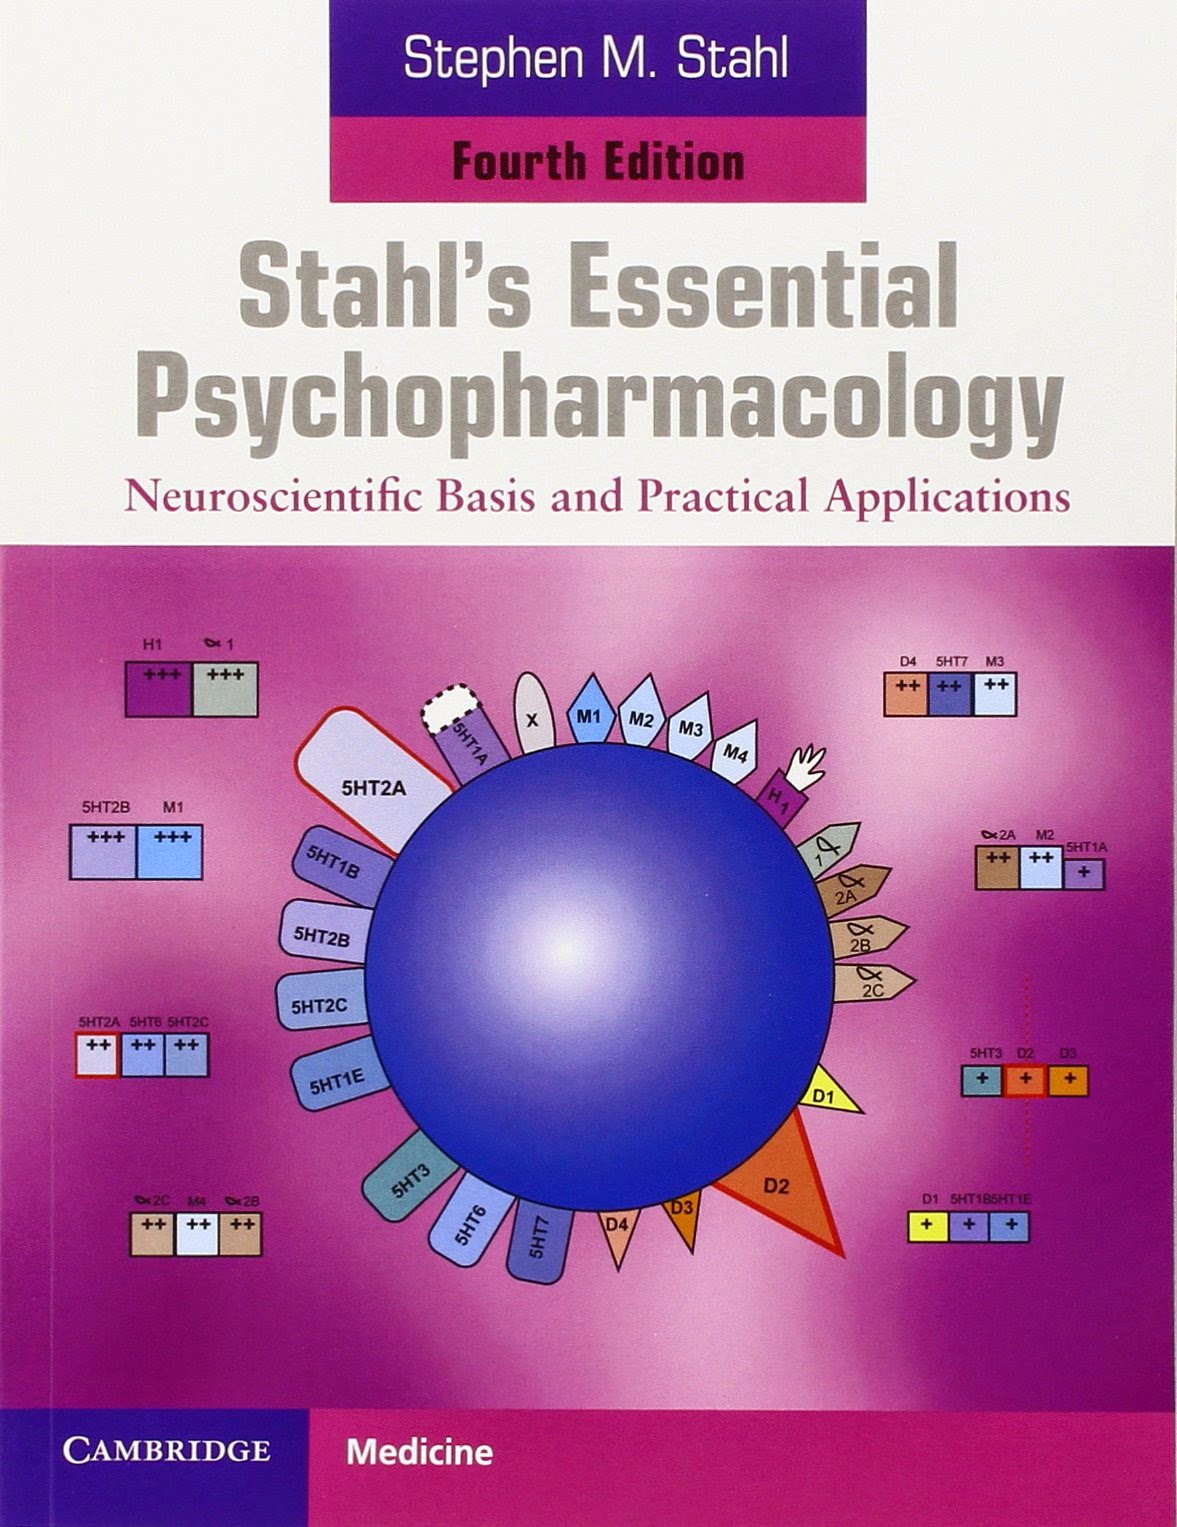 http://kingcheapebook.blogspot.com/2014/08/stahls-essential-psychopharmacology.html